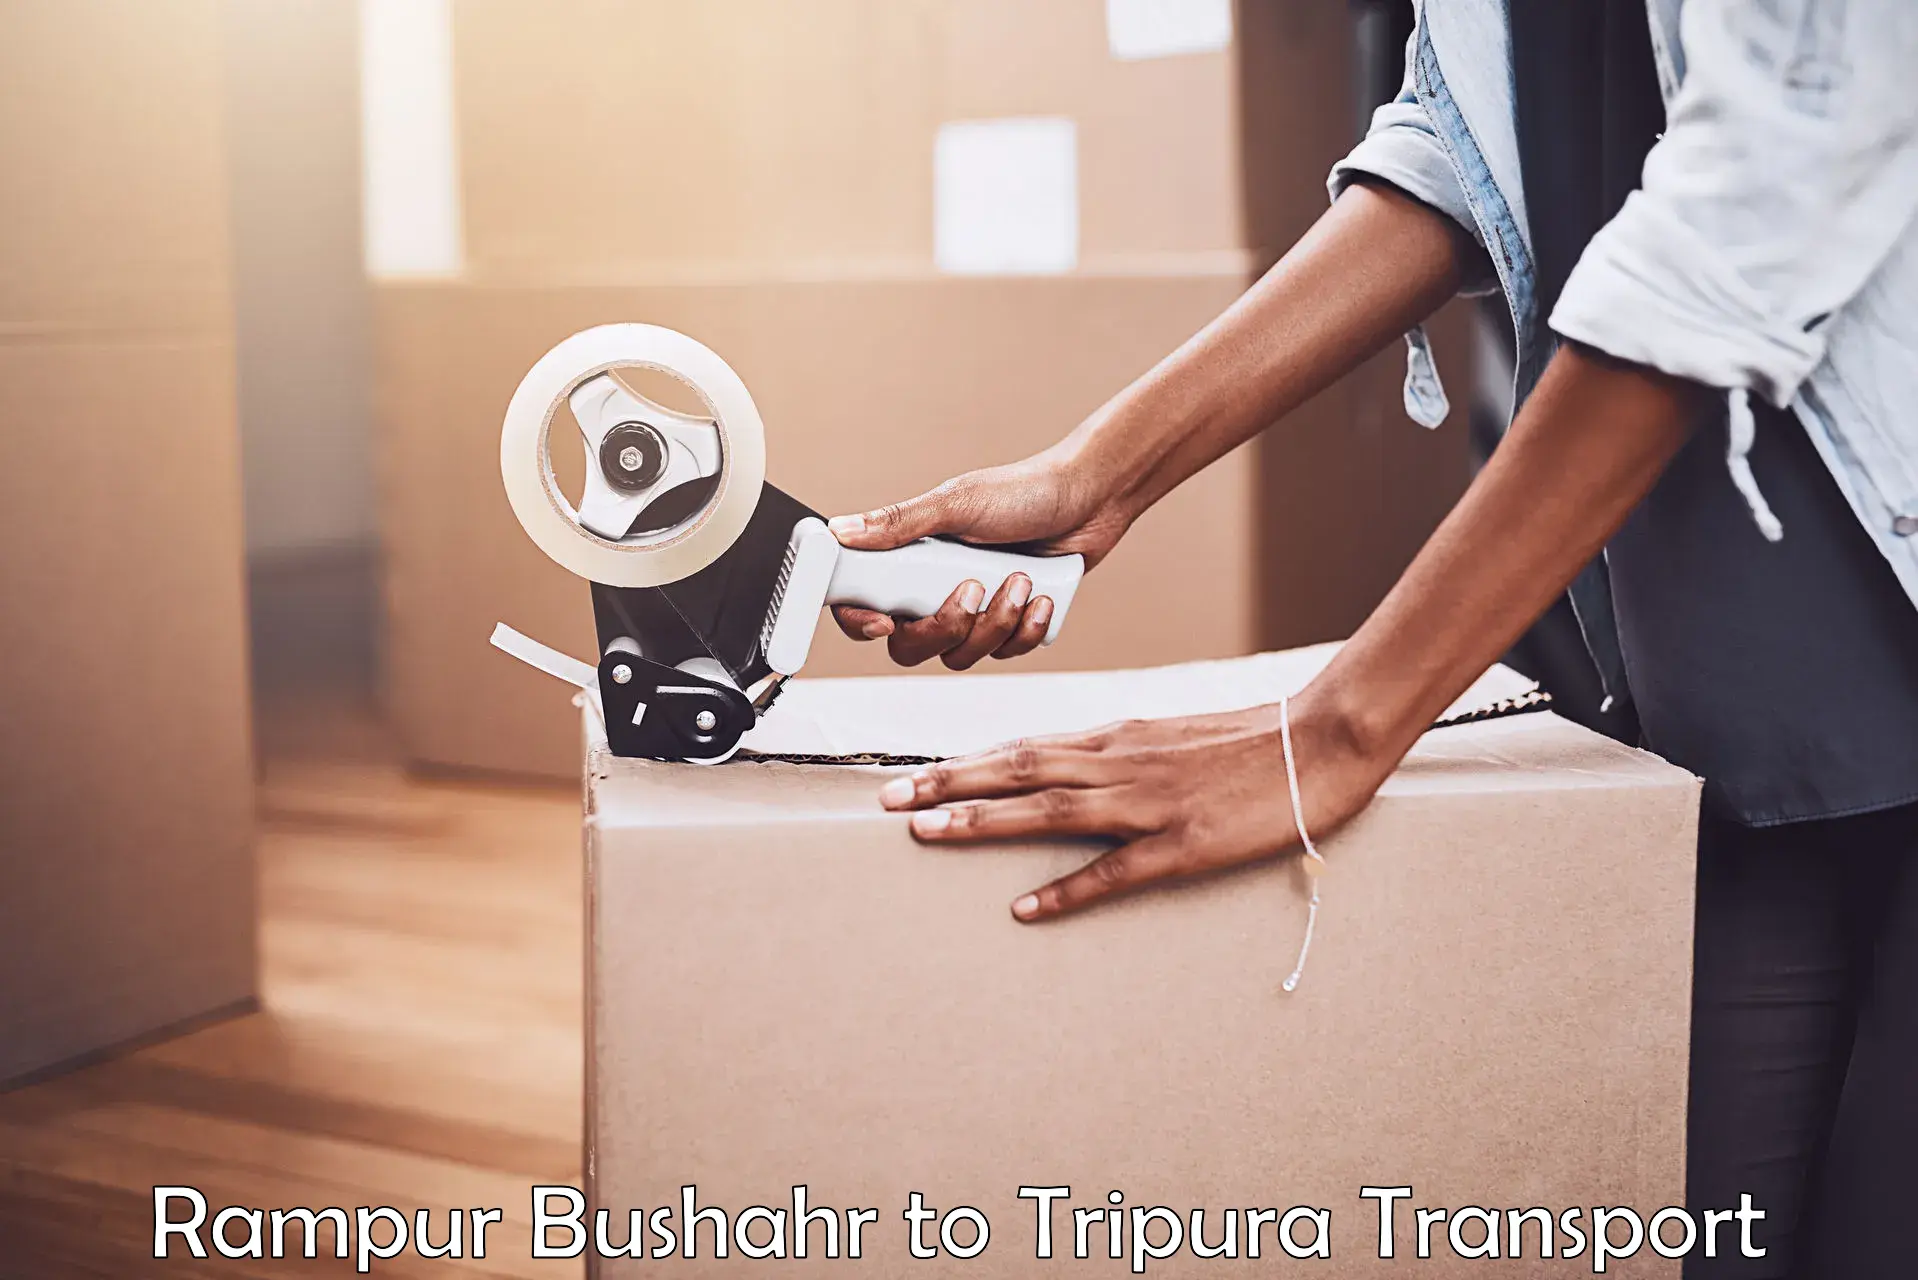 Bike shipping service Rampur Bushahr to Udaipur Tripura